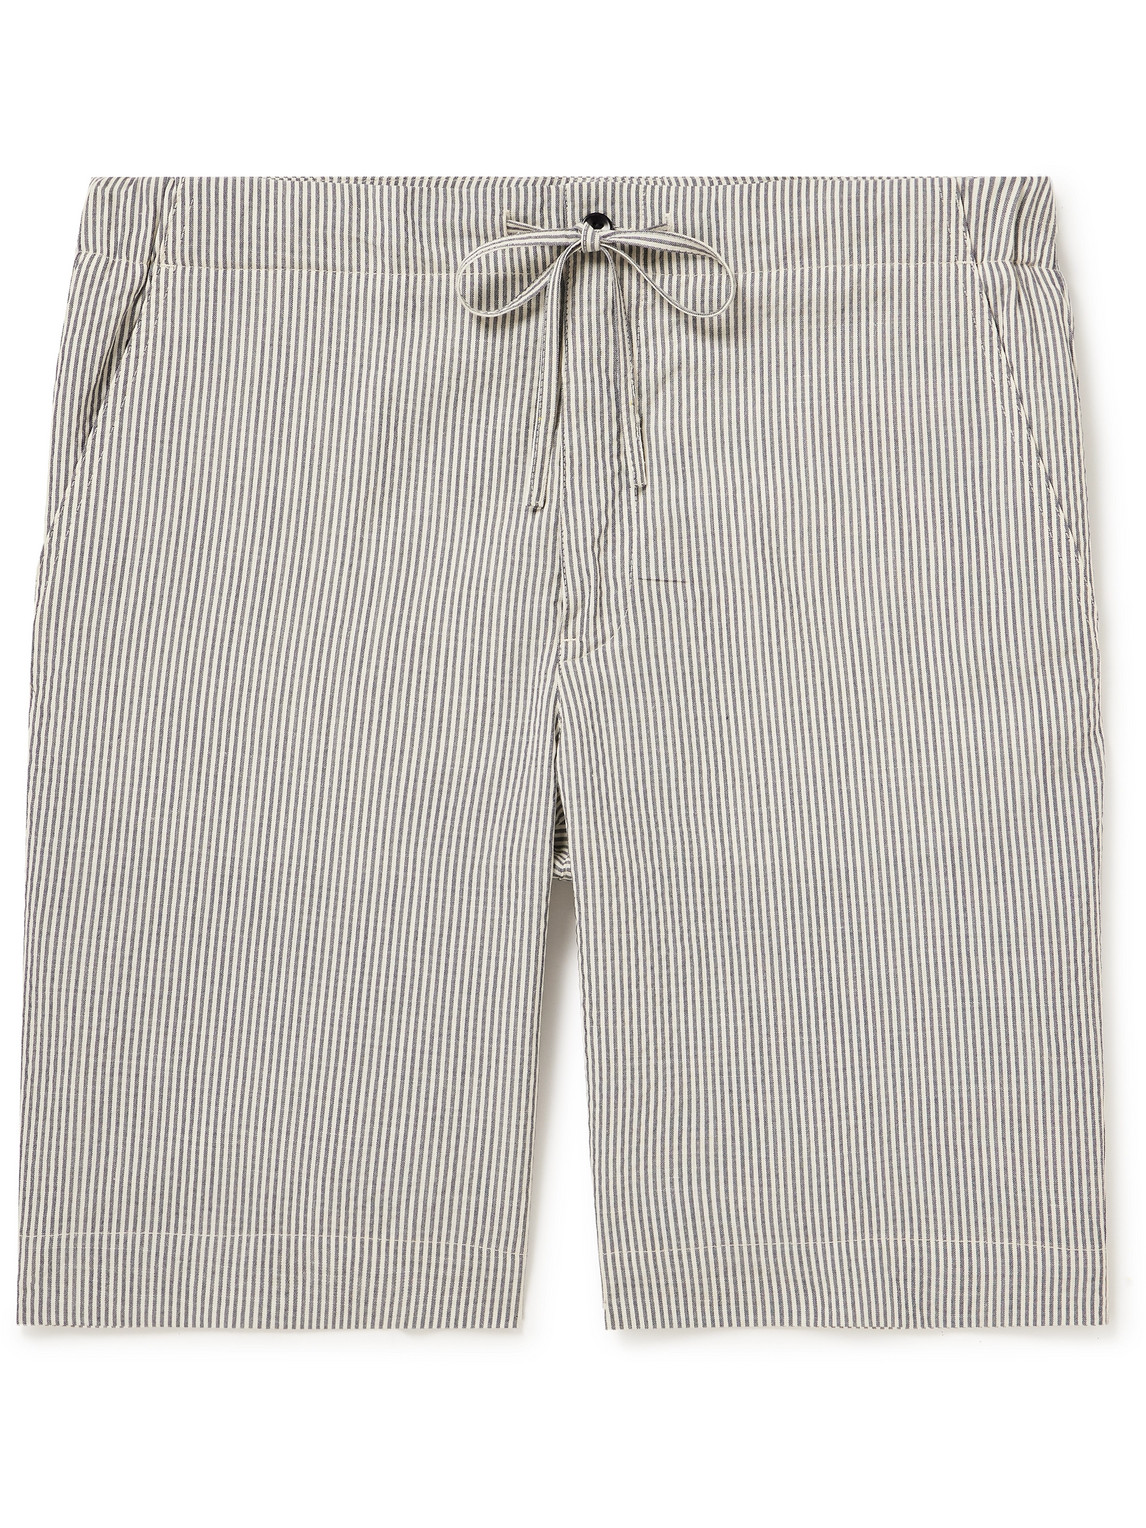 Loro Piana Coulisse Bermuda Striped Wool And Silk Blend Shorts In White Blue Stripe